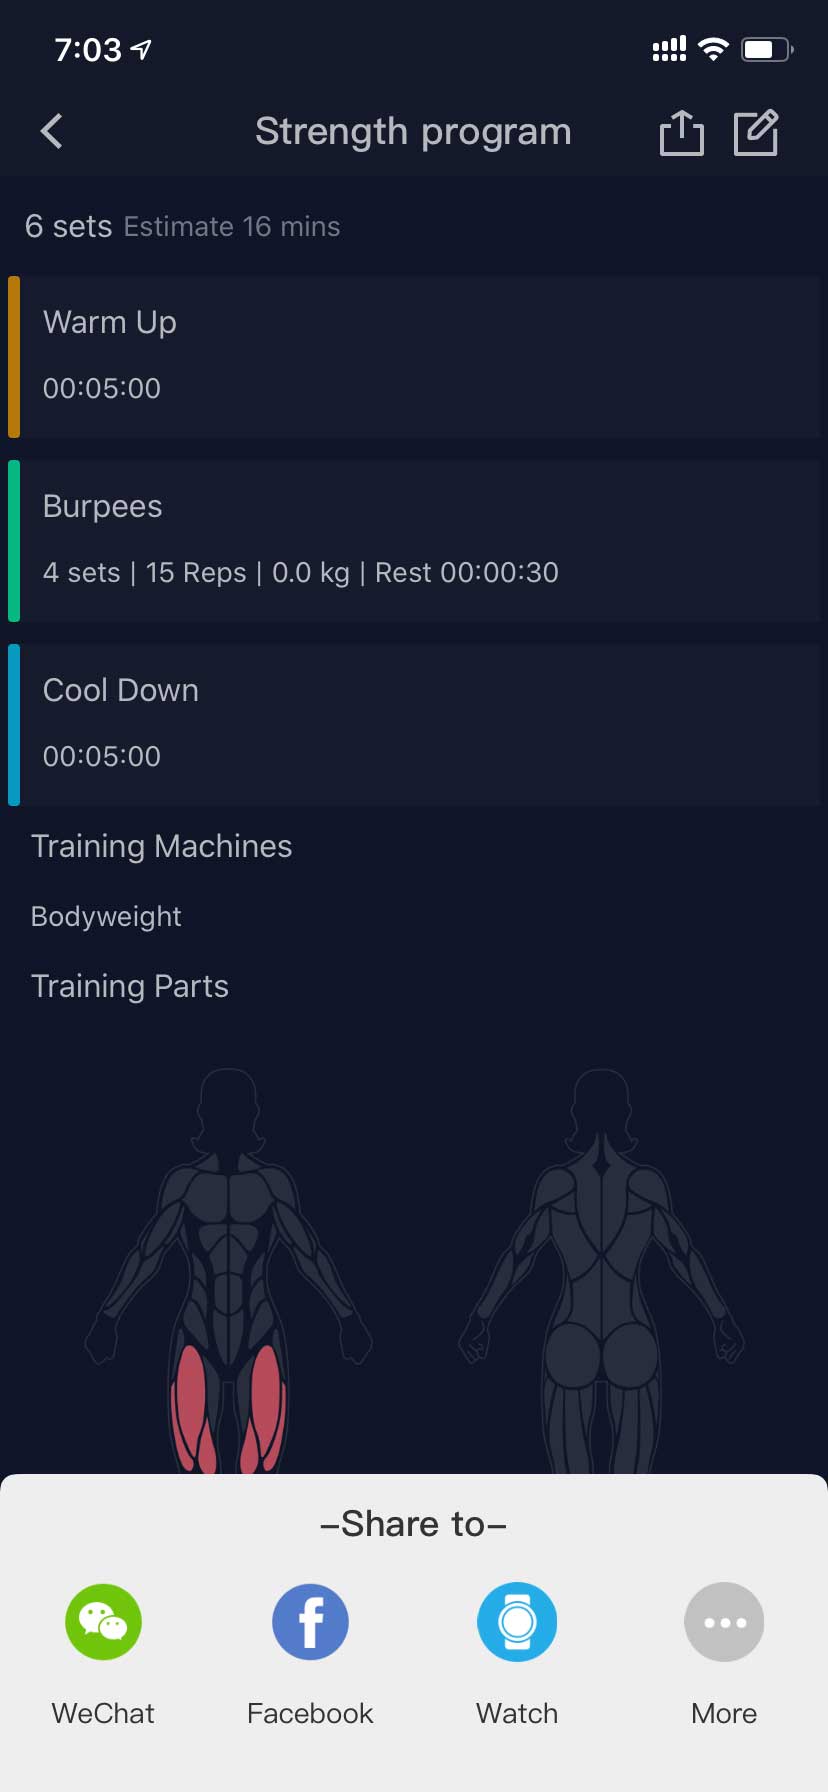 COROS app sample strength workout sharing